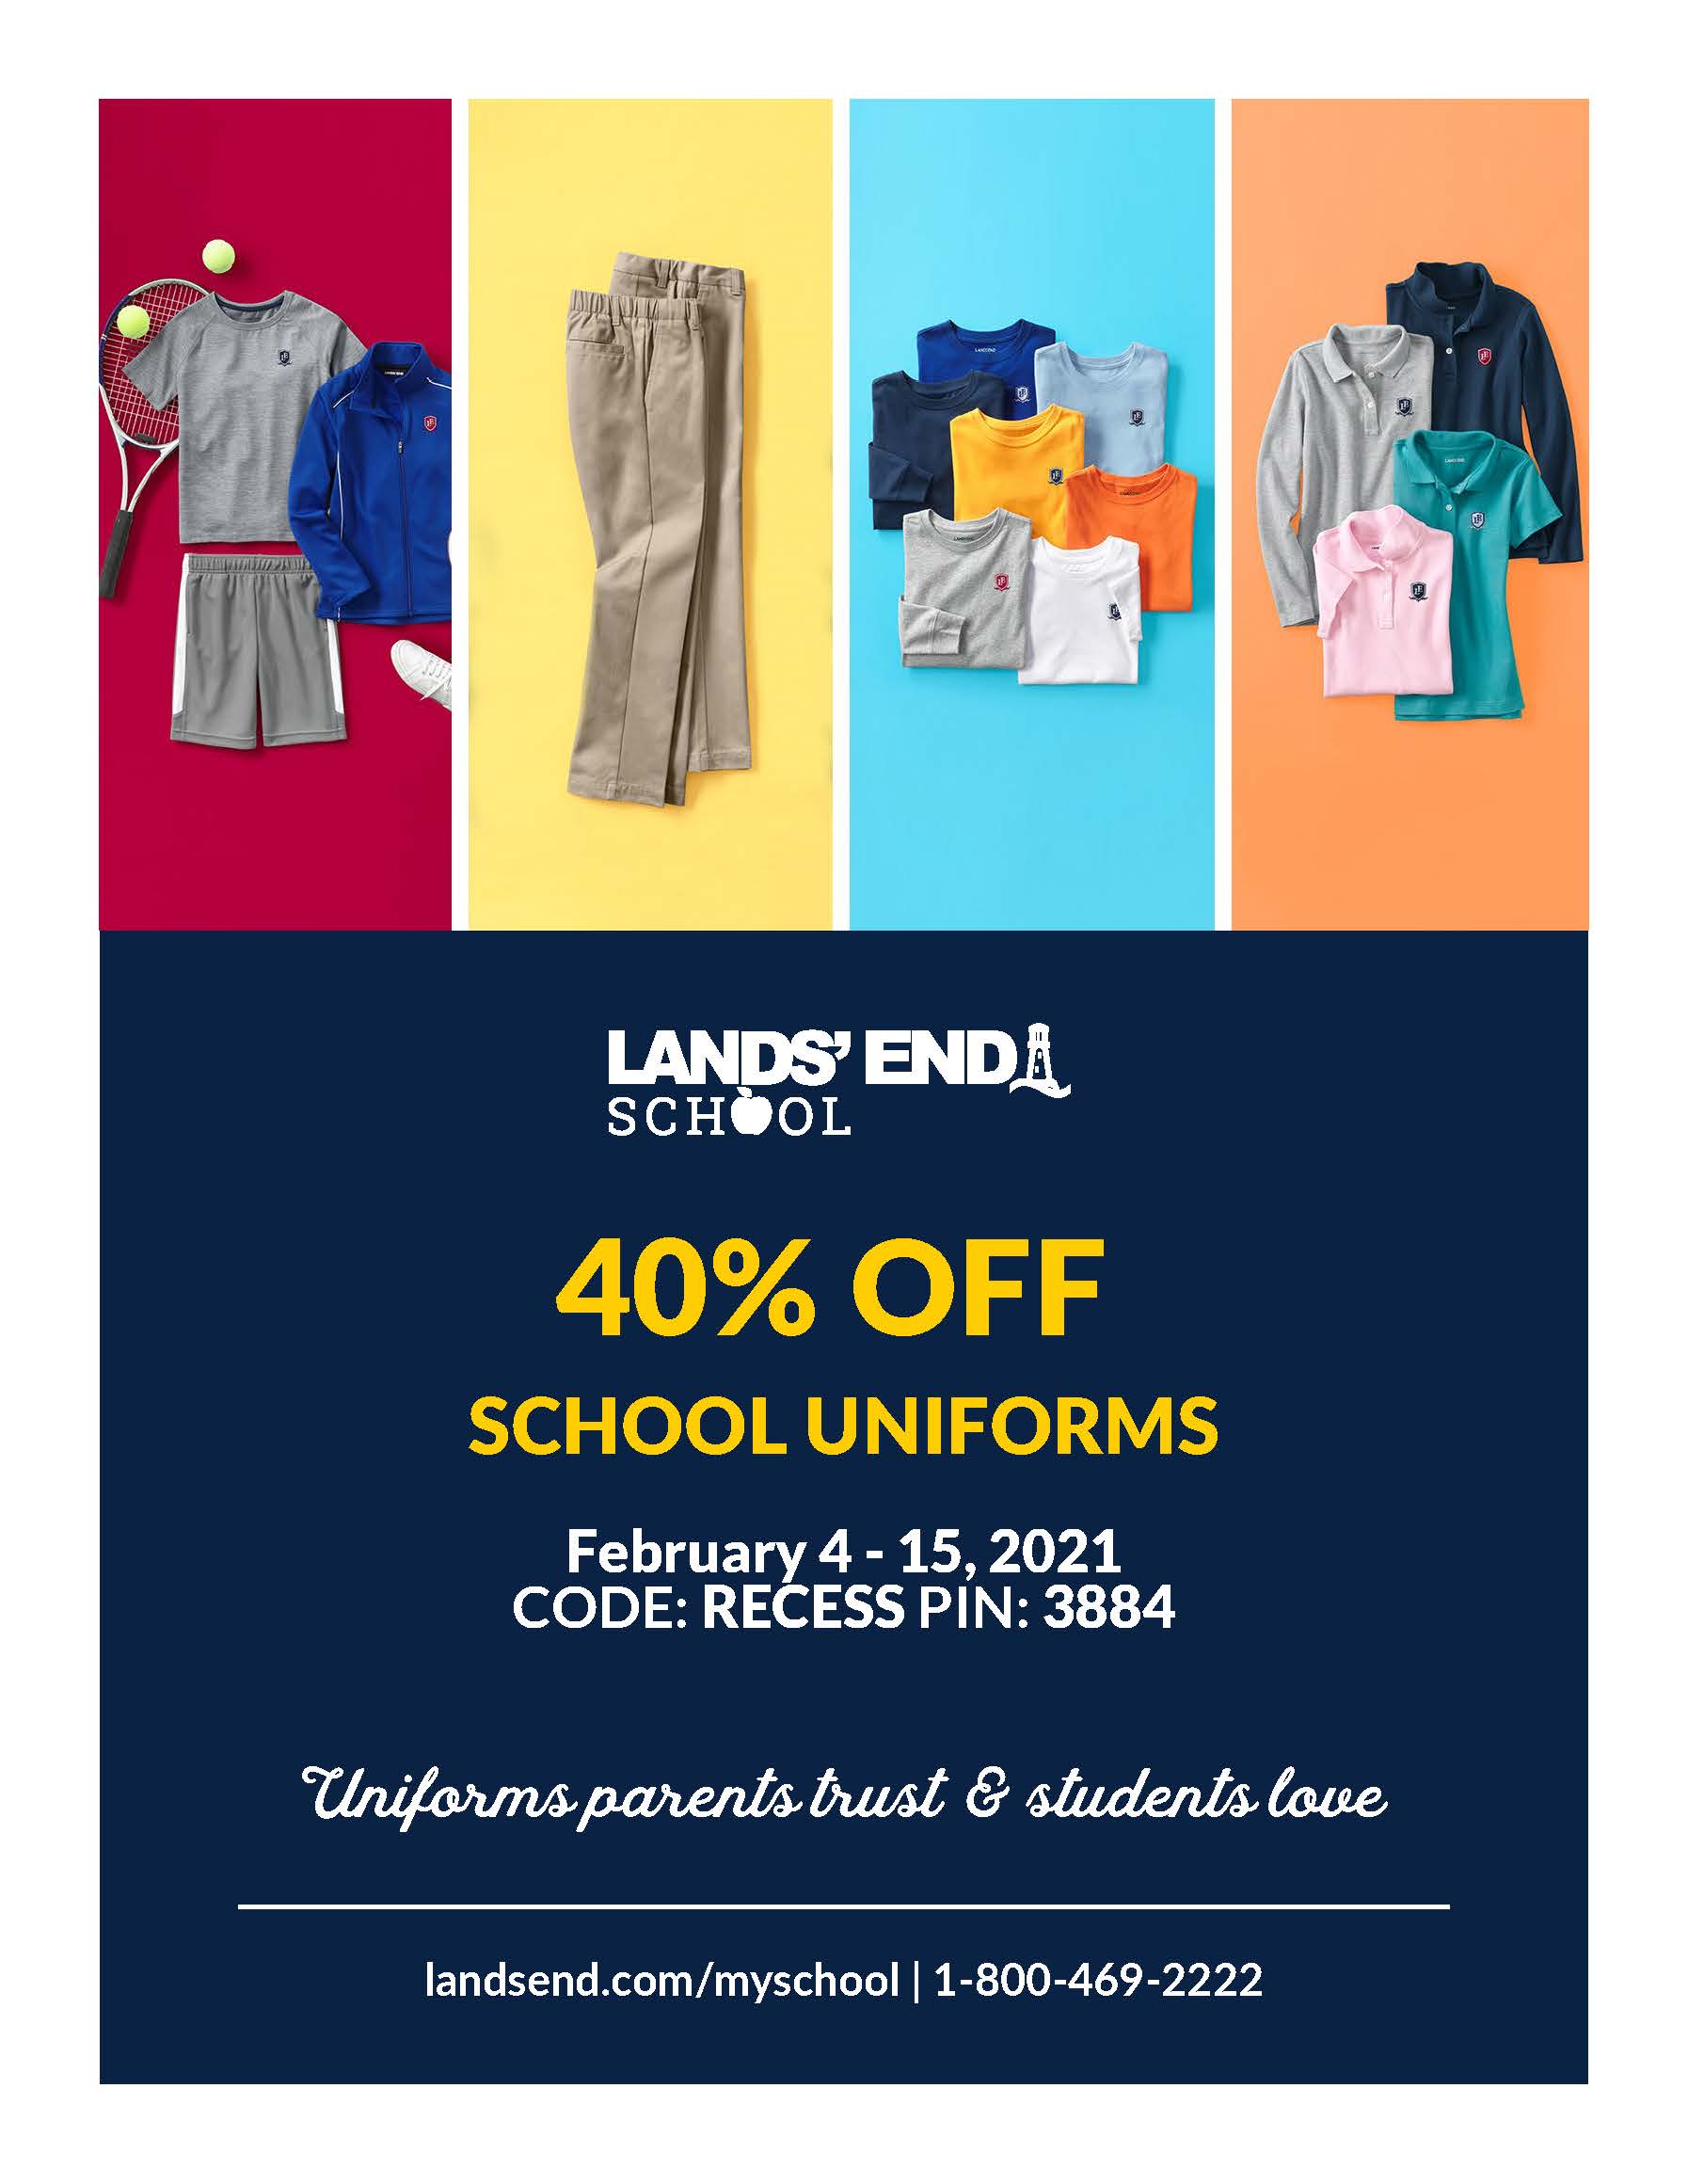 Christian Academy School System | Lands' End School Uniforms | 40% OFF | February 4-15